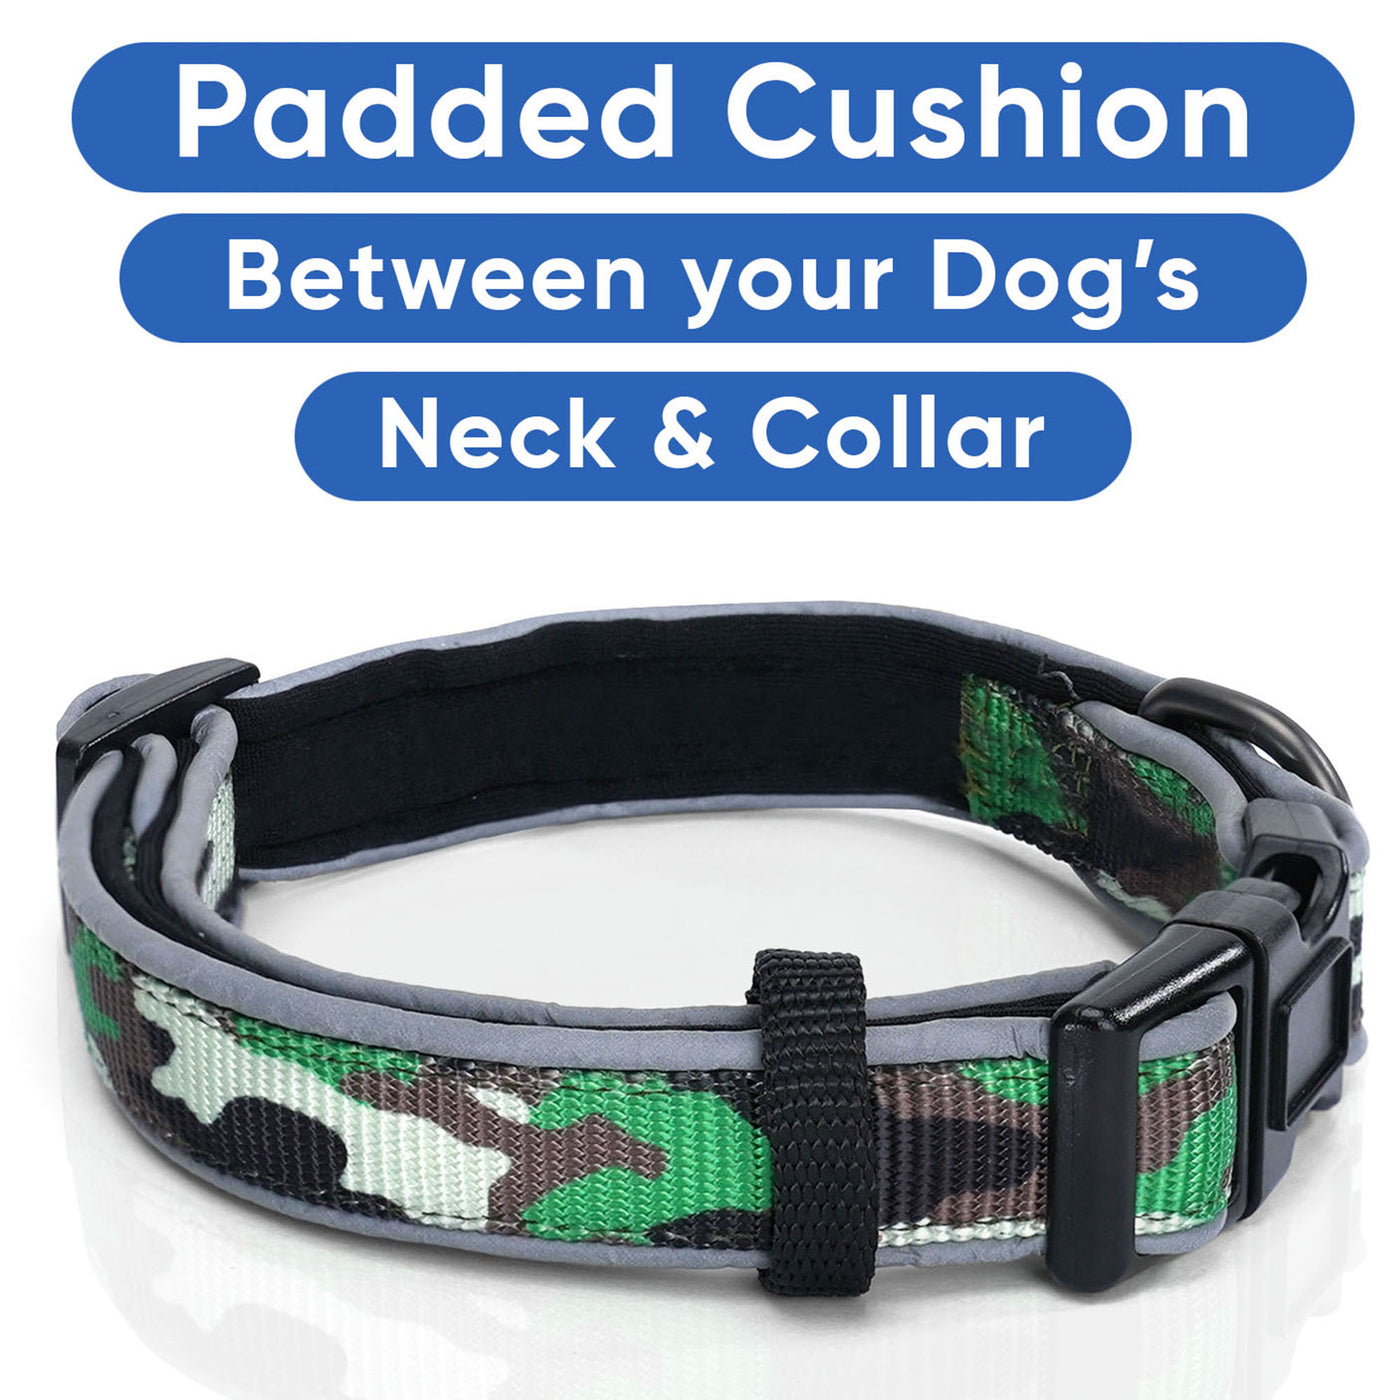 Camouflage Reflective Padded Dog Collar Padded Cushion